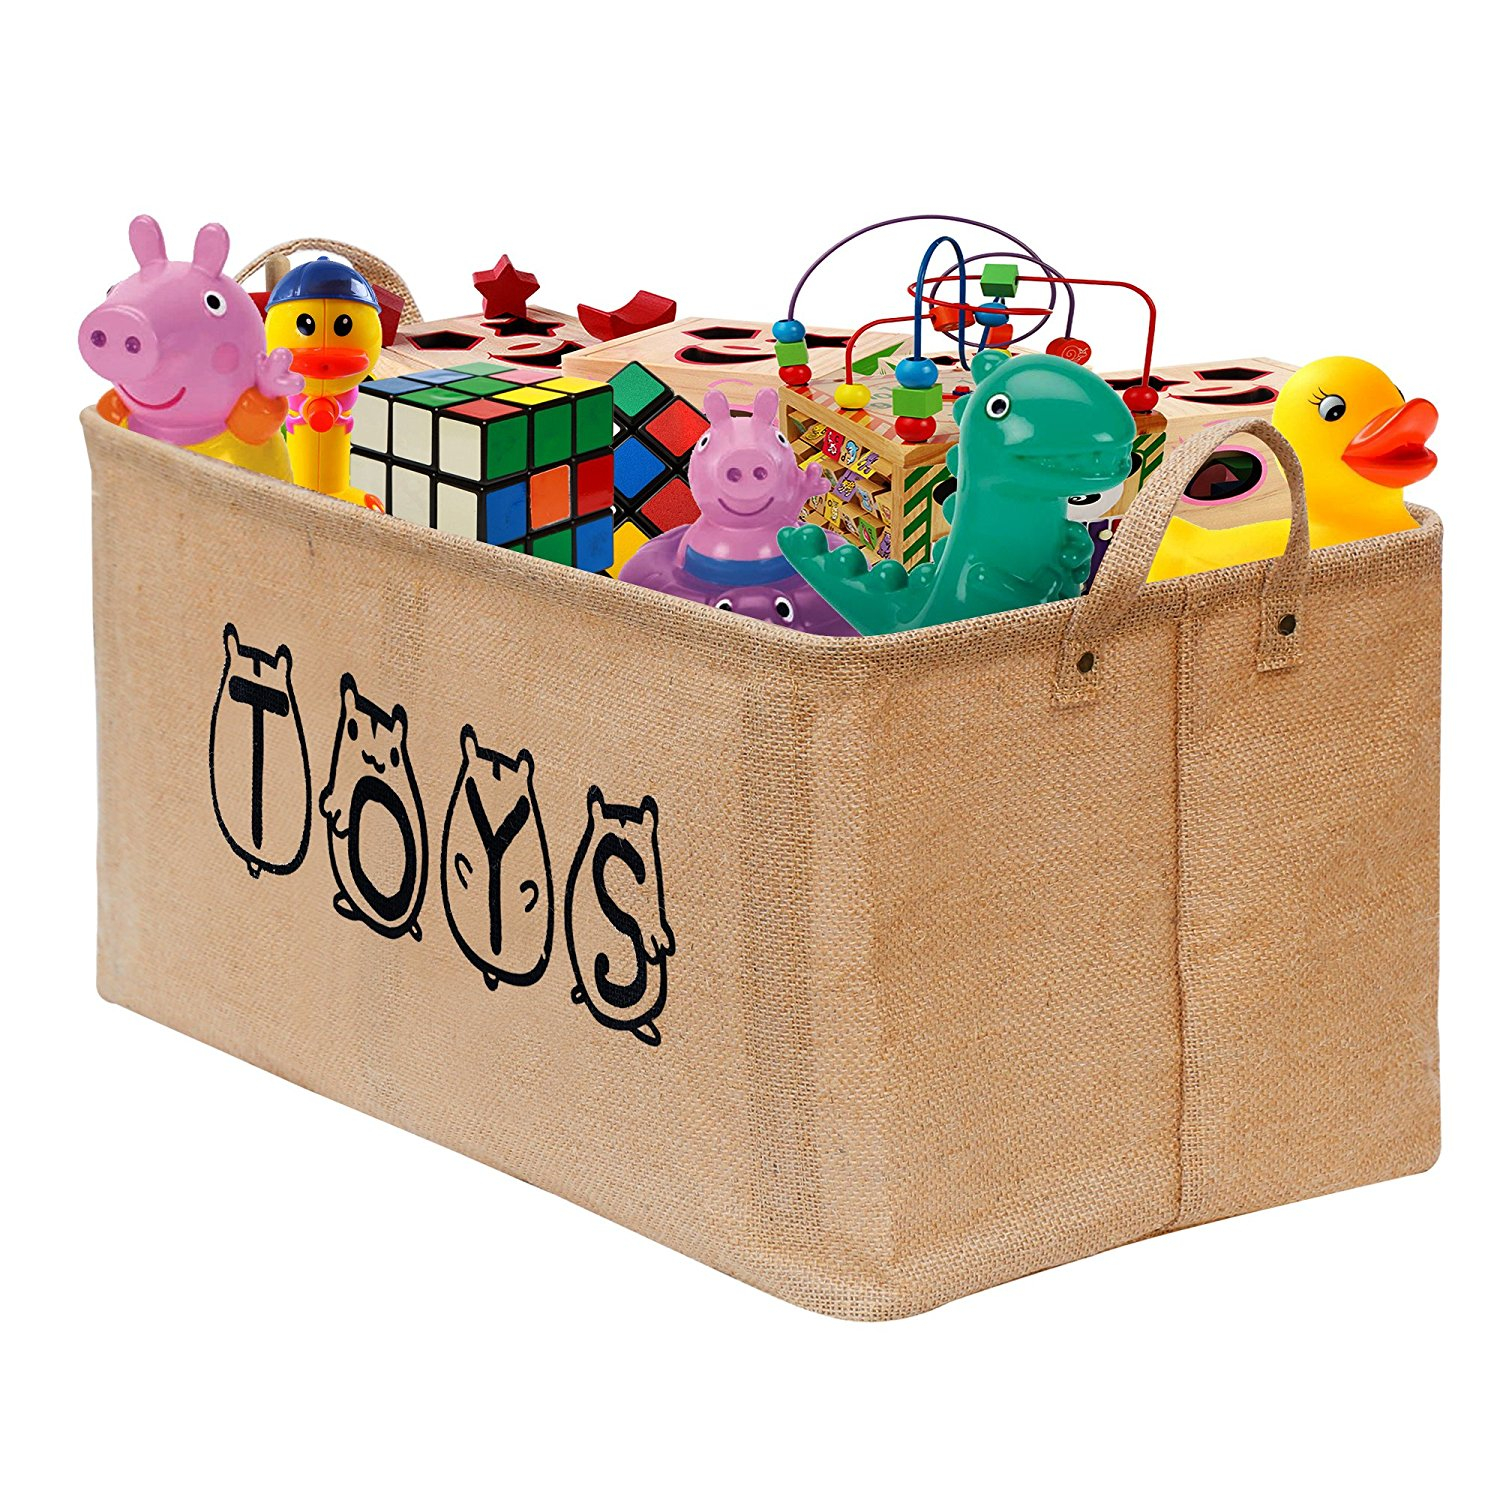 Включи игру коробок. Коробки для игрушек. Коробка с игрушками. Toy Box (игрушки). Боксы с игрушками для детей.